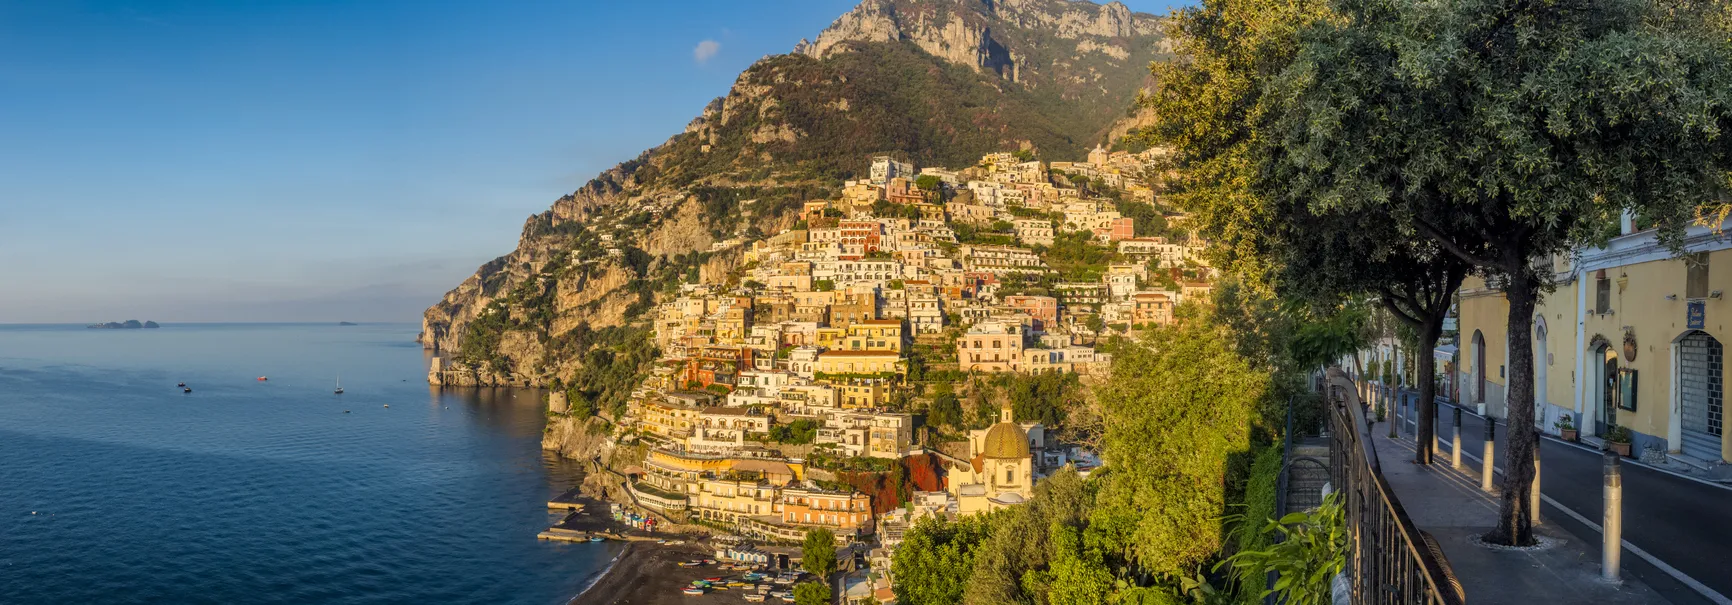 Positano, côte amalfitaine, péninsule de Sorrrente, Campanie, Italie © iStock / Don White